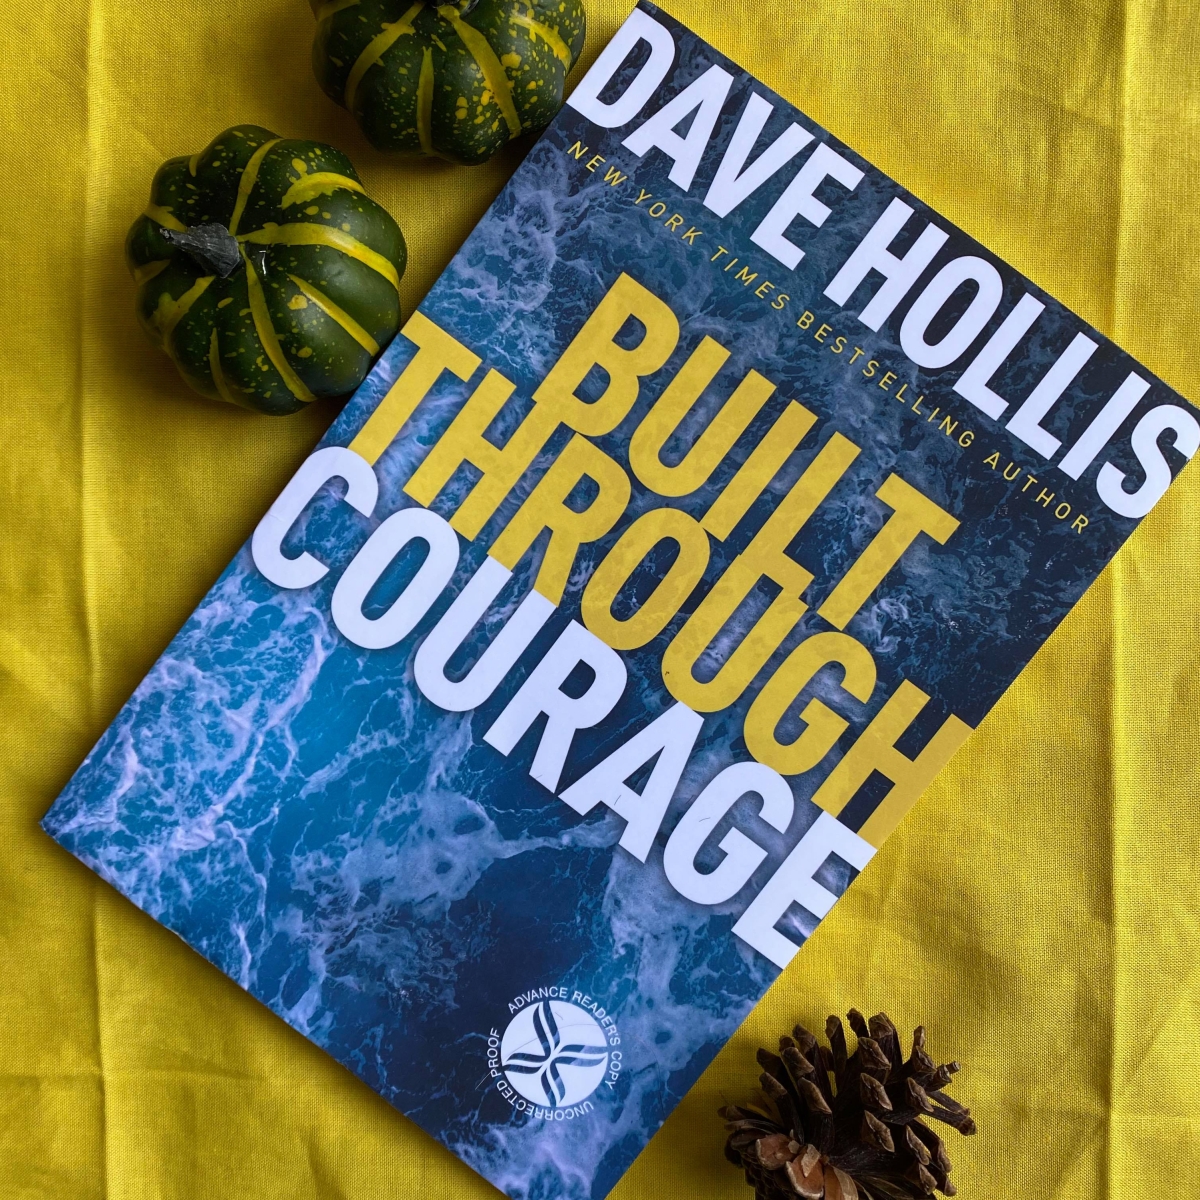 Dave Hollis is “Built Through Courage”